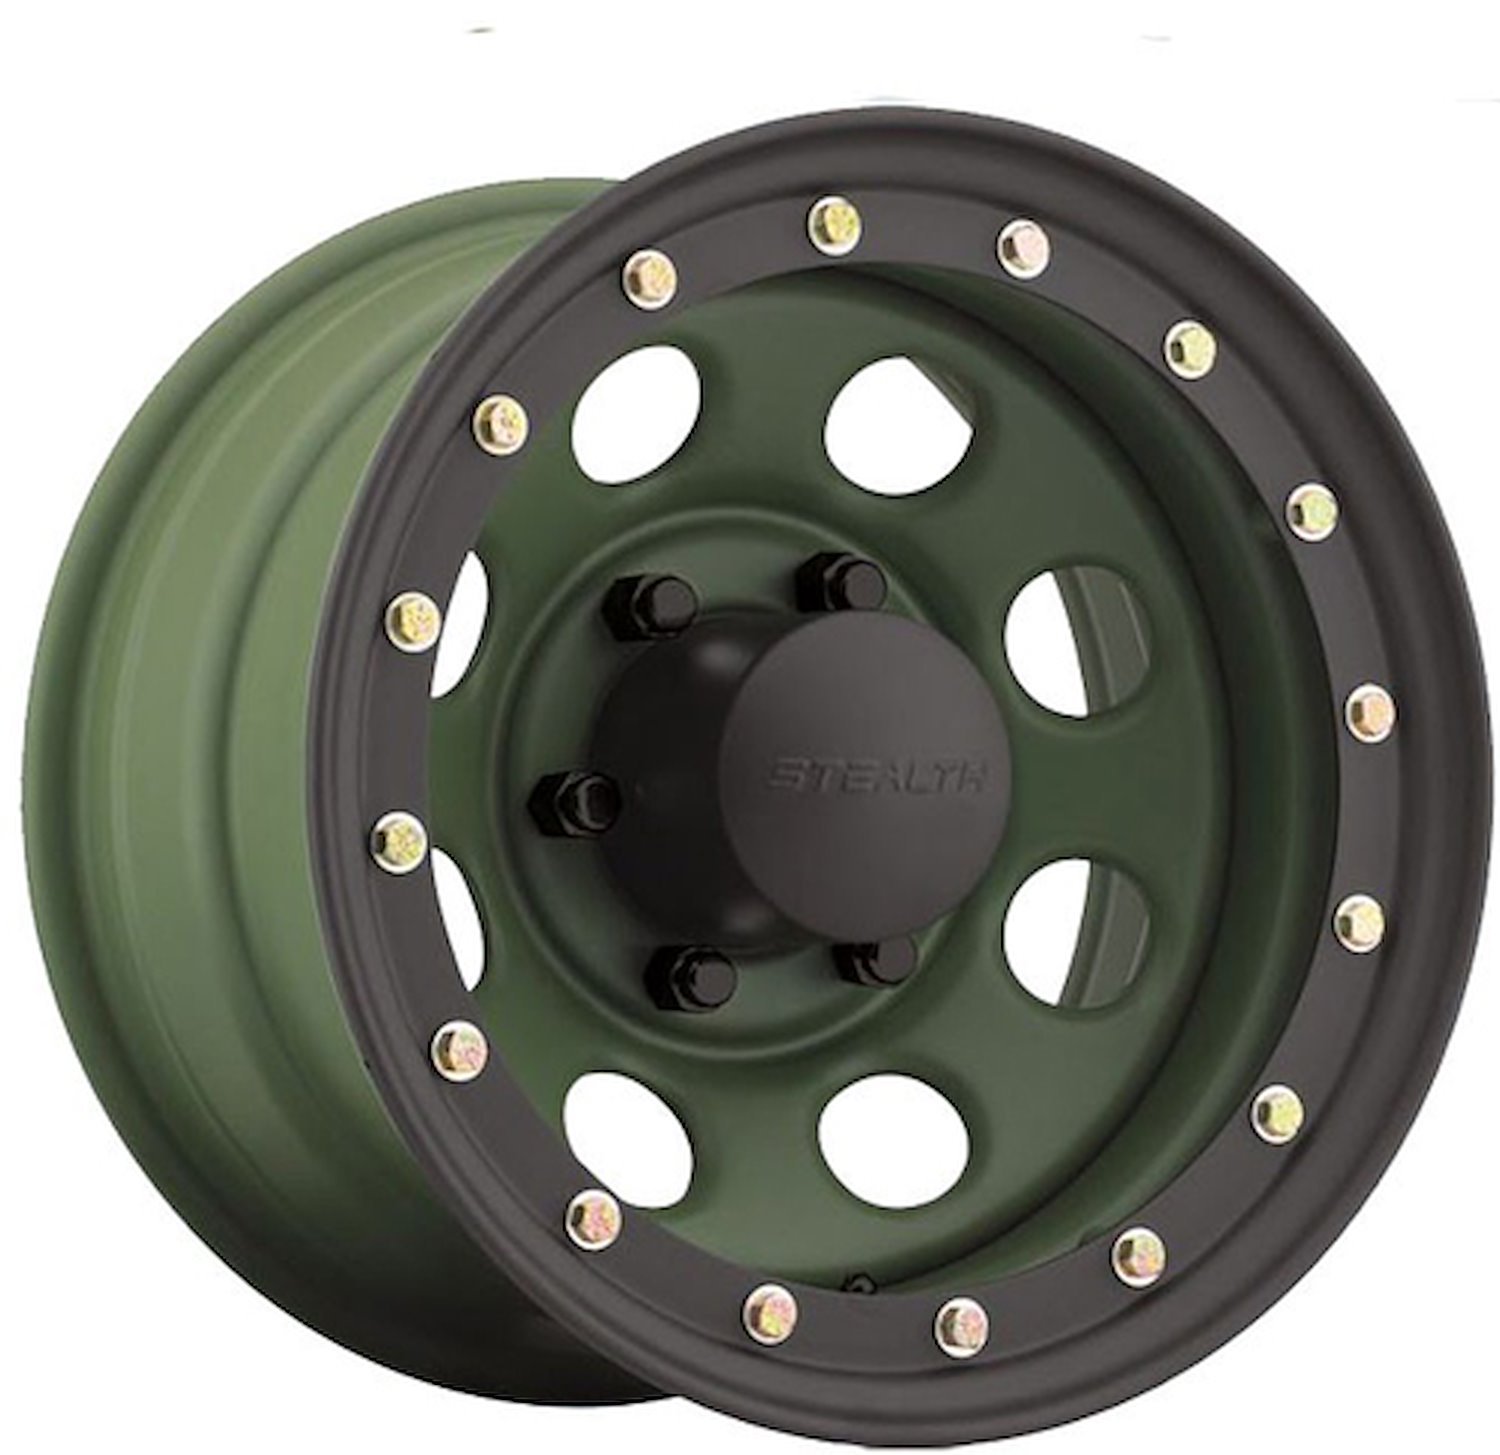 Simulated Beadlock Stealth Camo Green Crawler Wheel (Series 046) Size: 16" x 8"